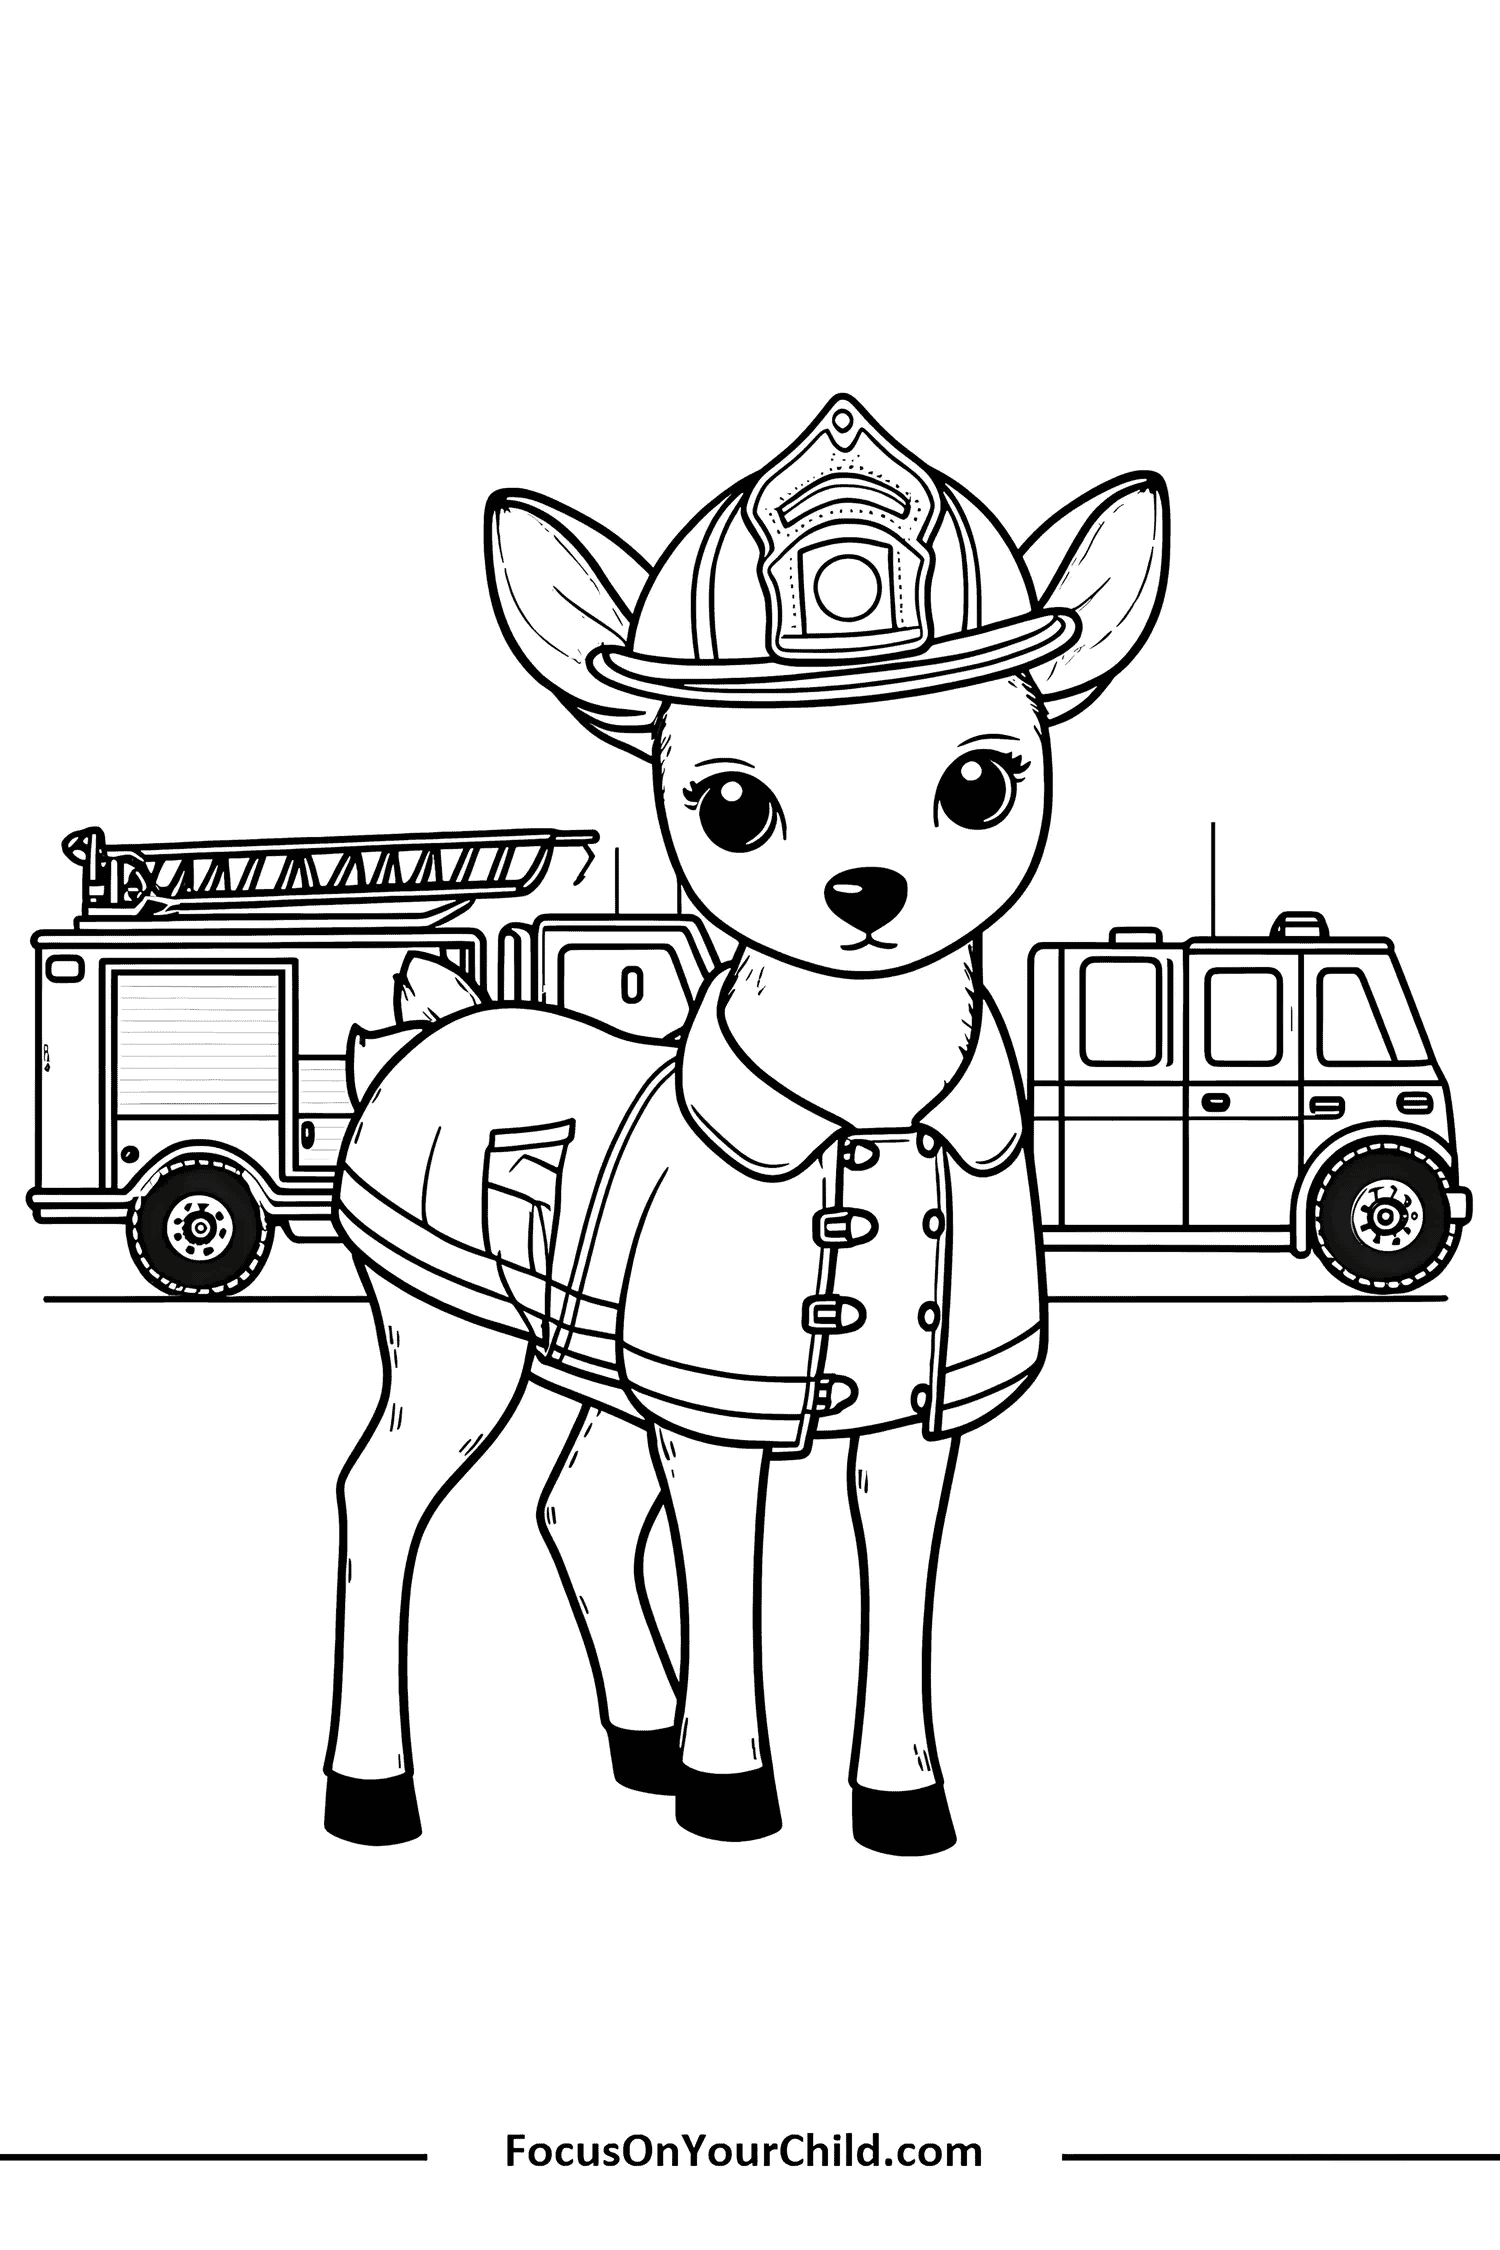 Cartoon deer firefighter coloring page for kids on FocusOnYourChild.com.